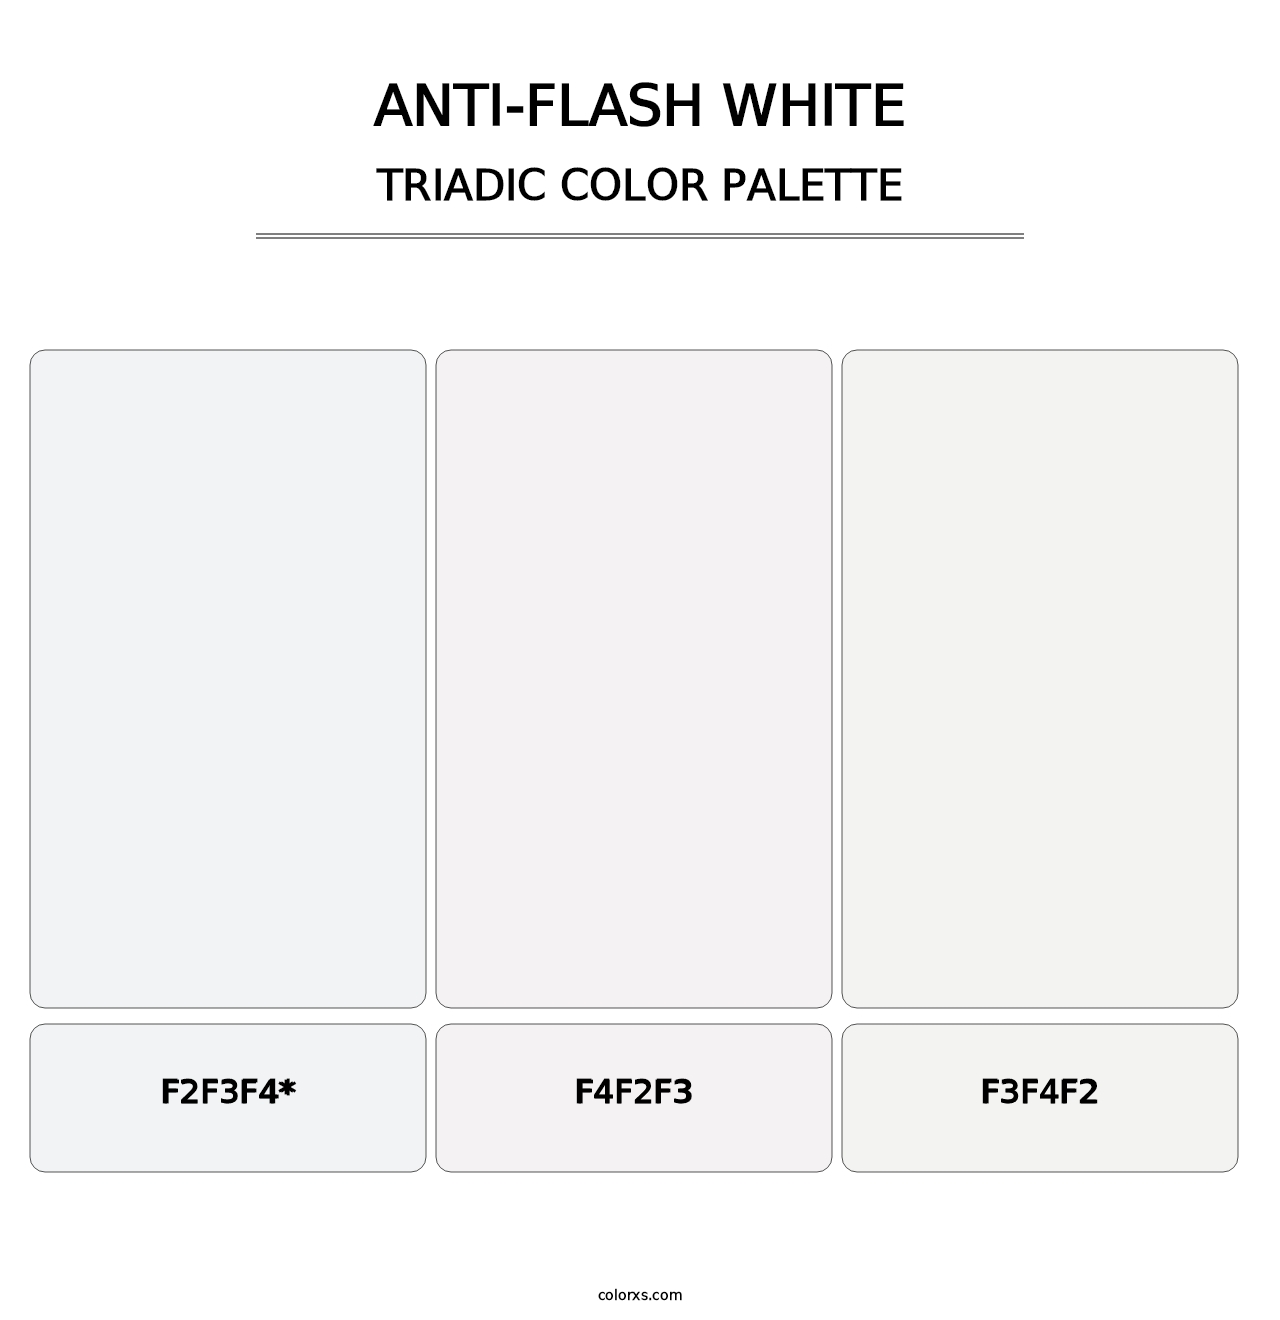 Anti-flash white - Triadic Color Palette